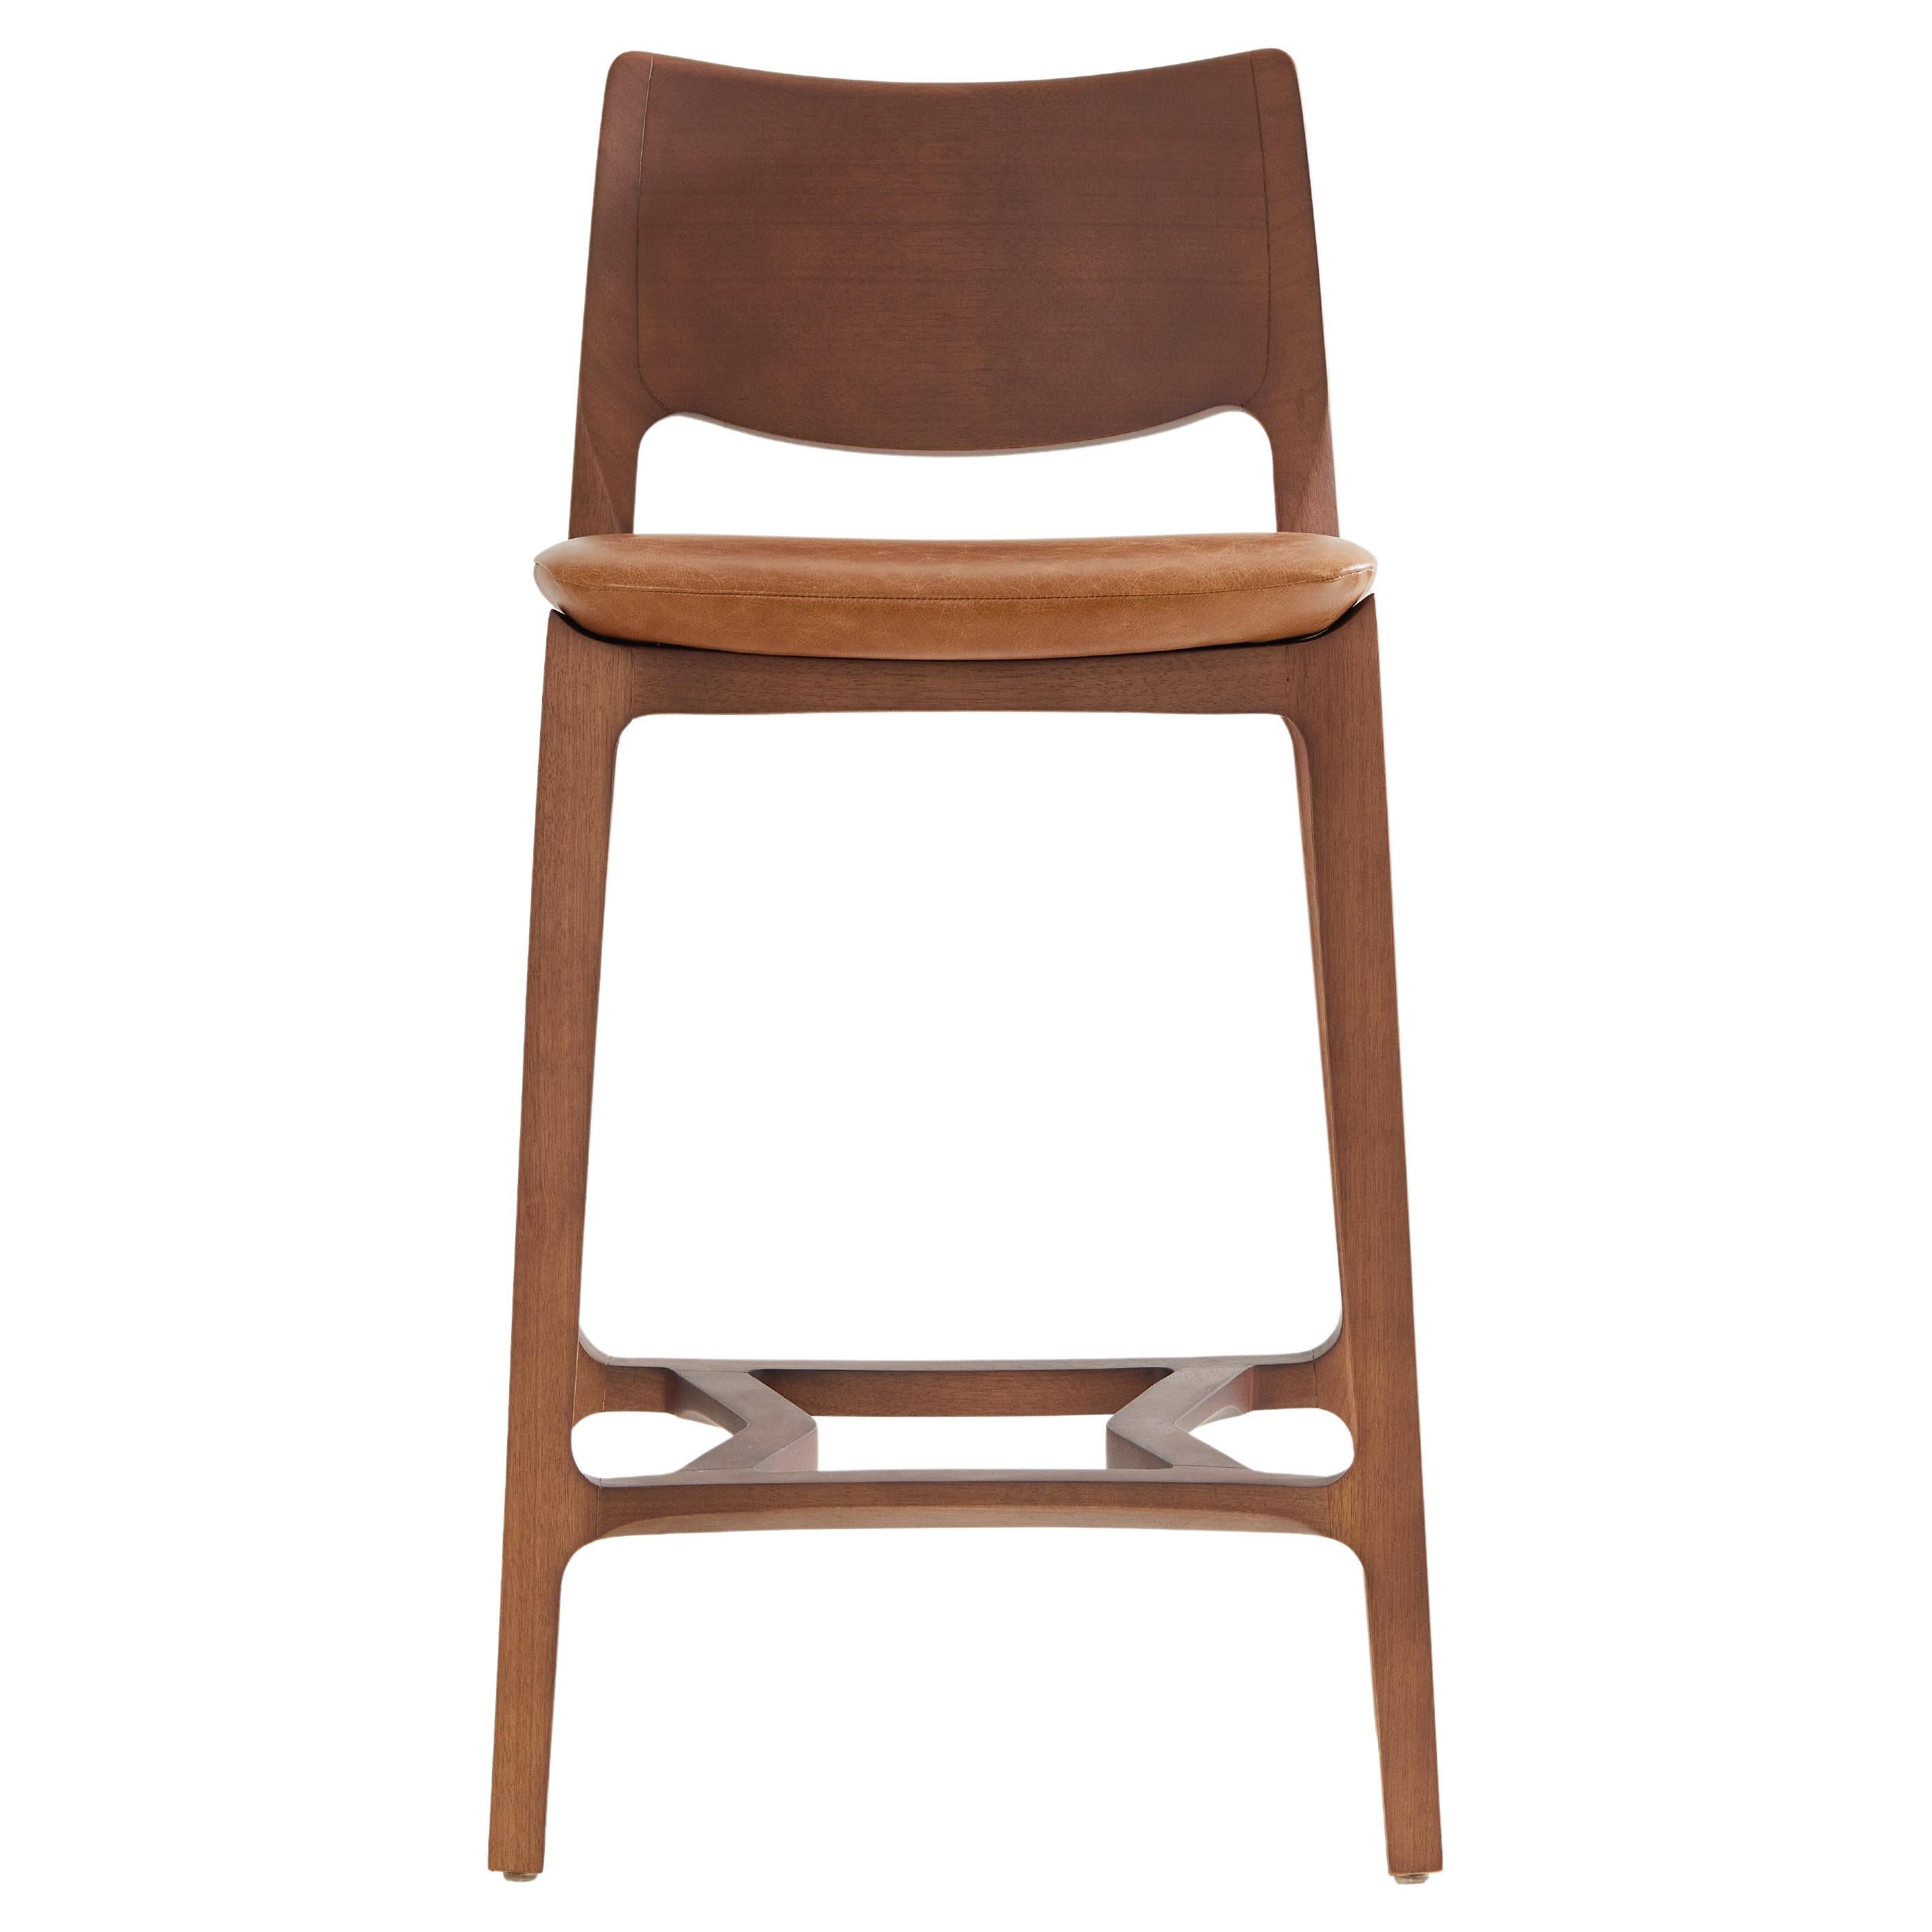 Aurora stool, walnut solid wood finish, solid back, camel leather seating